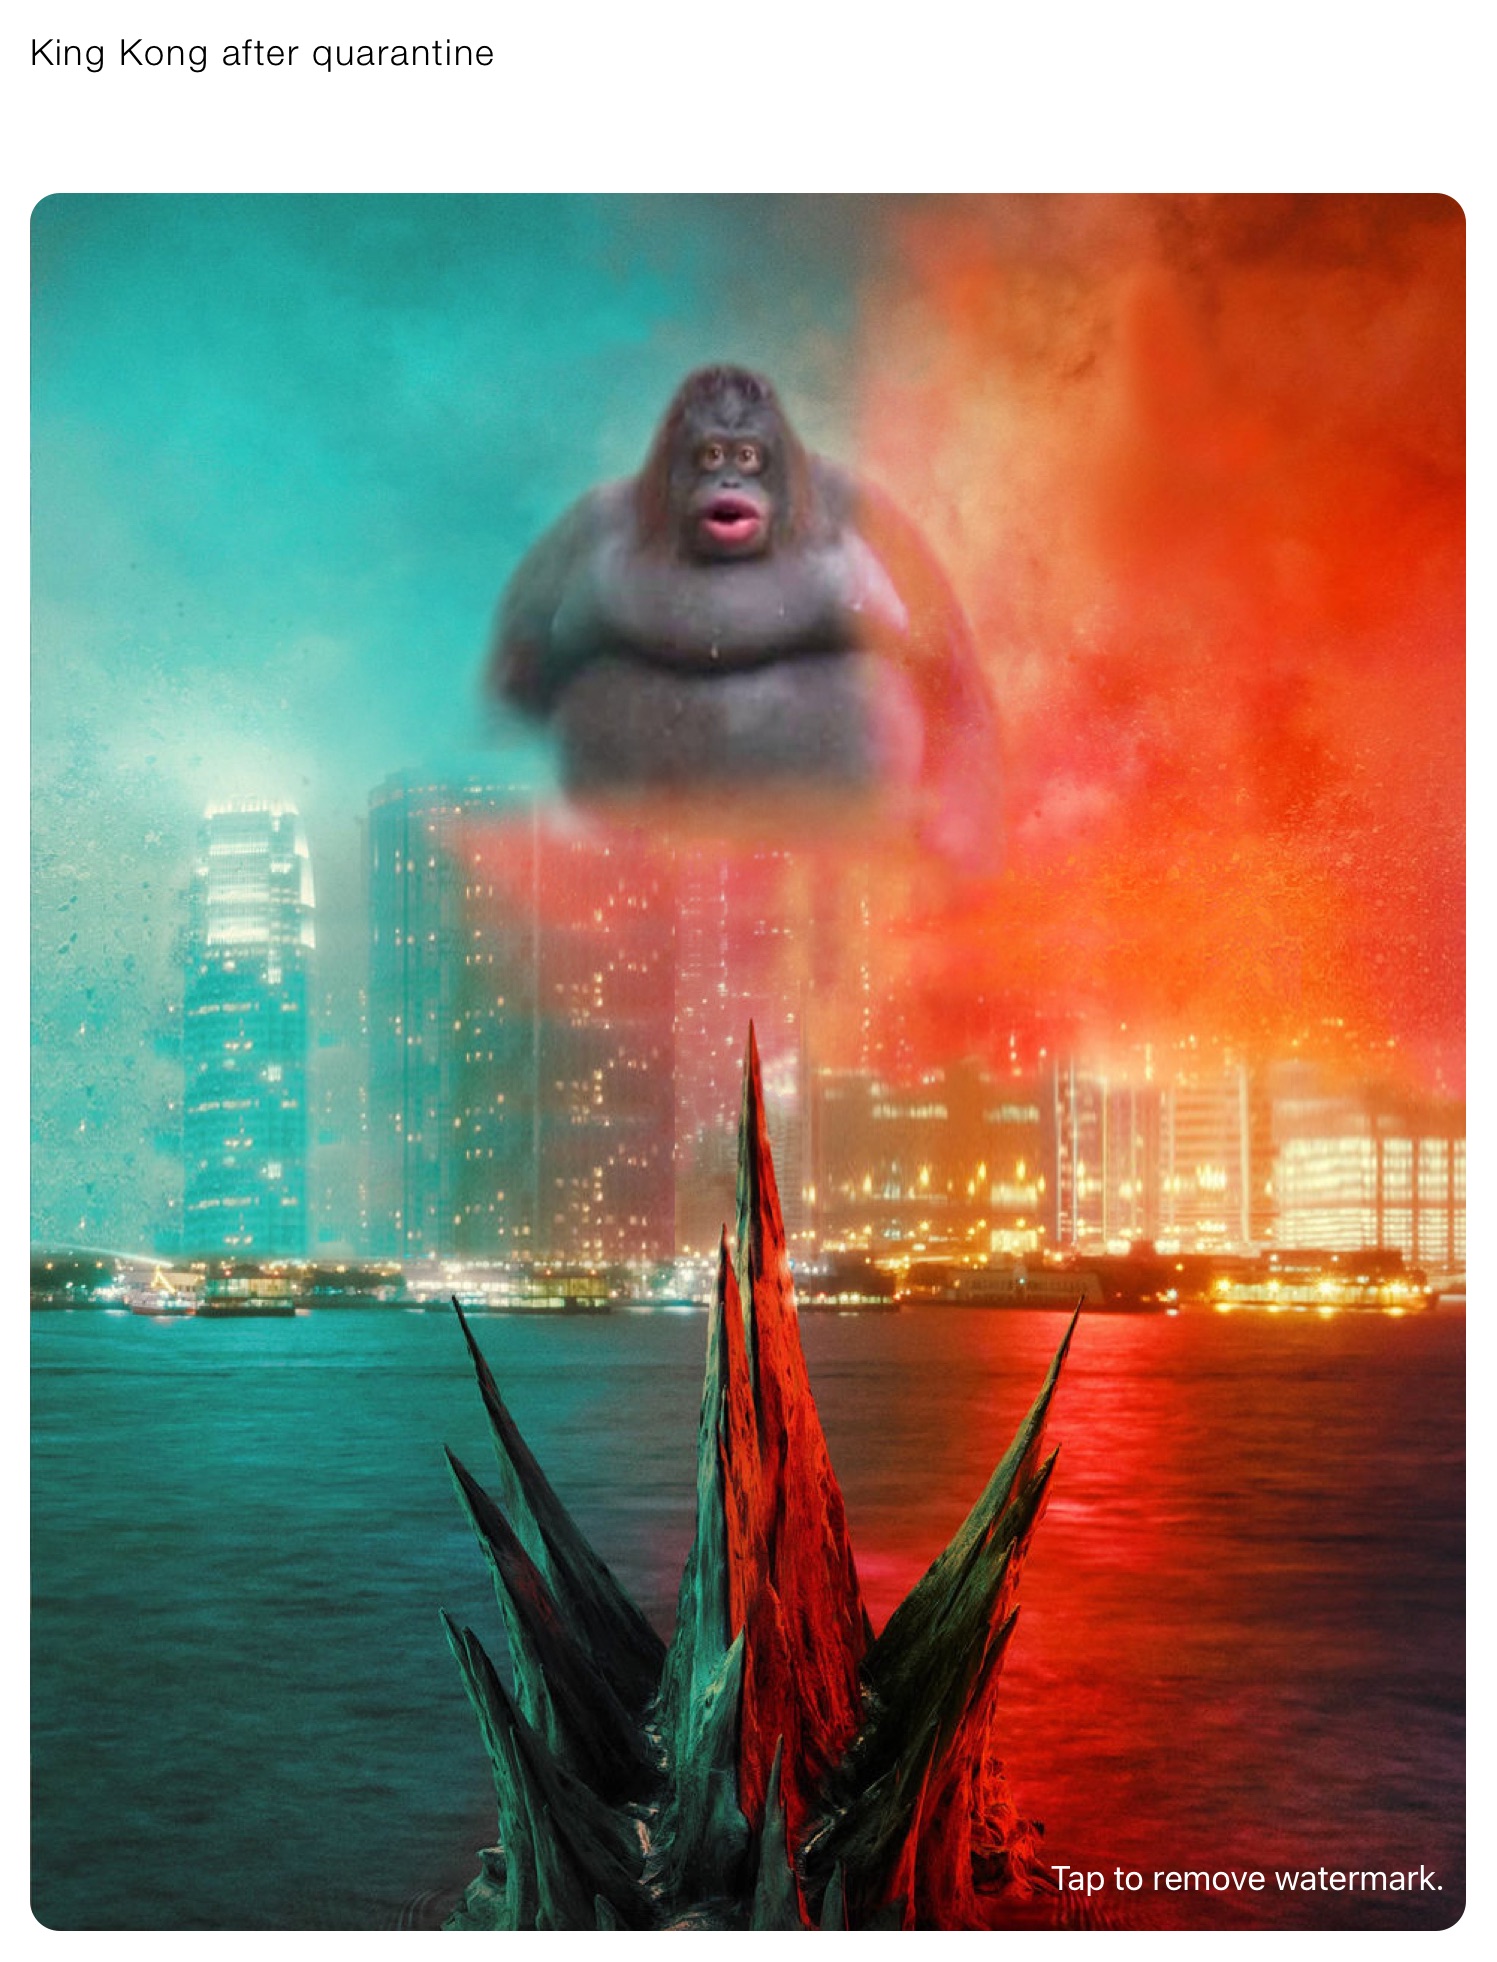 King Kong after quarantine 

